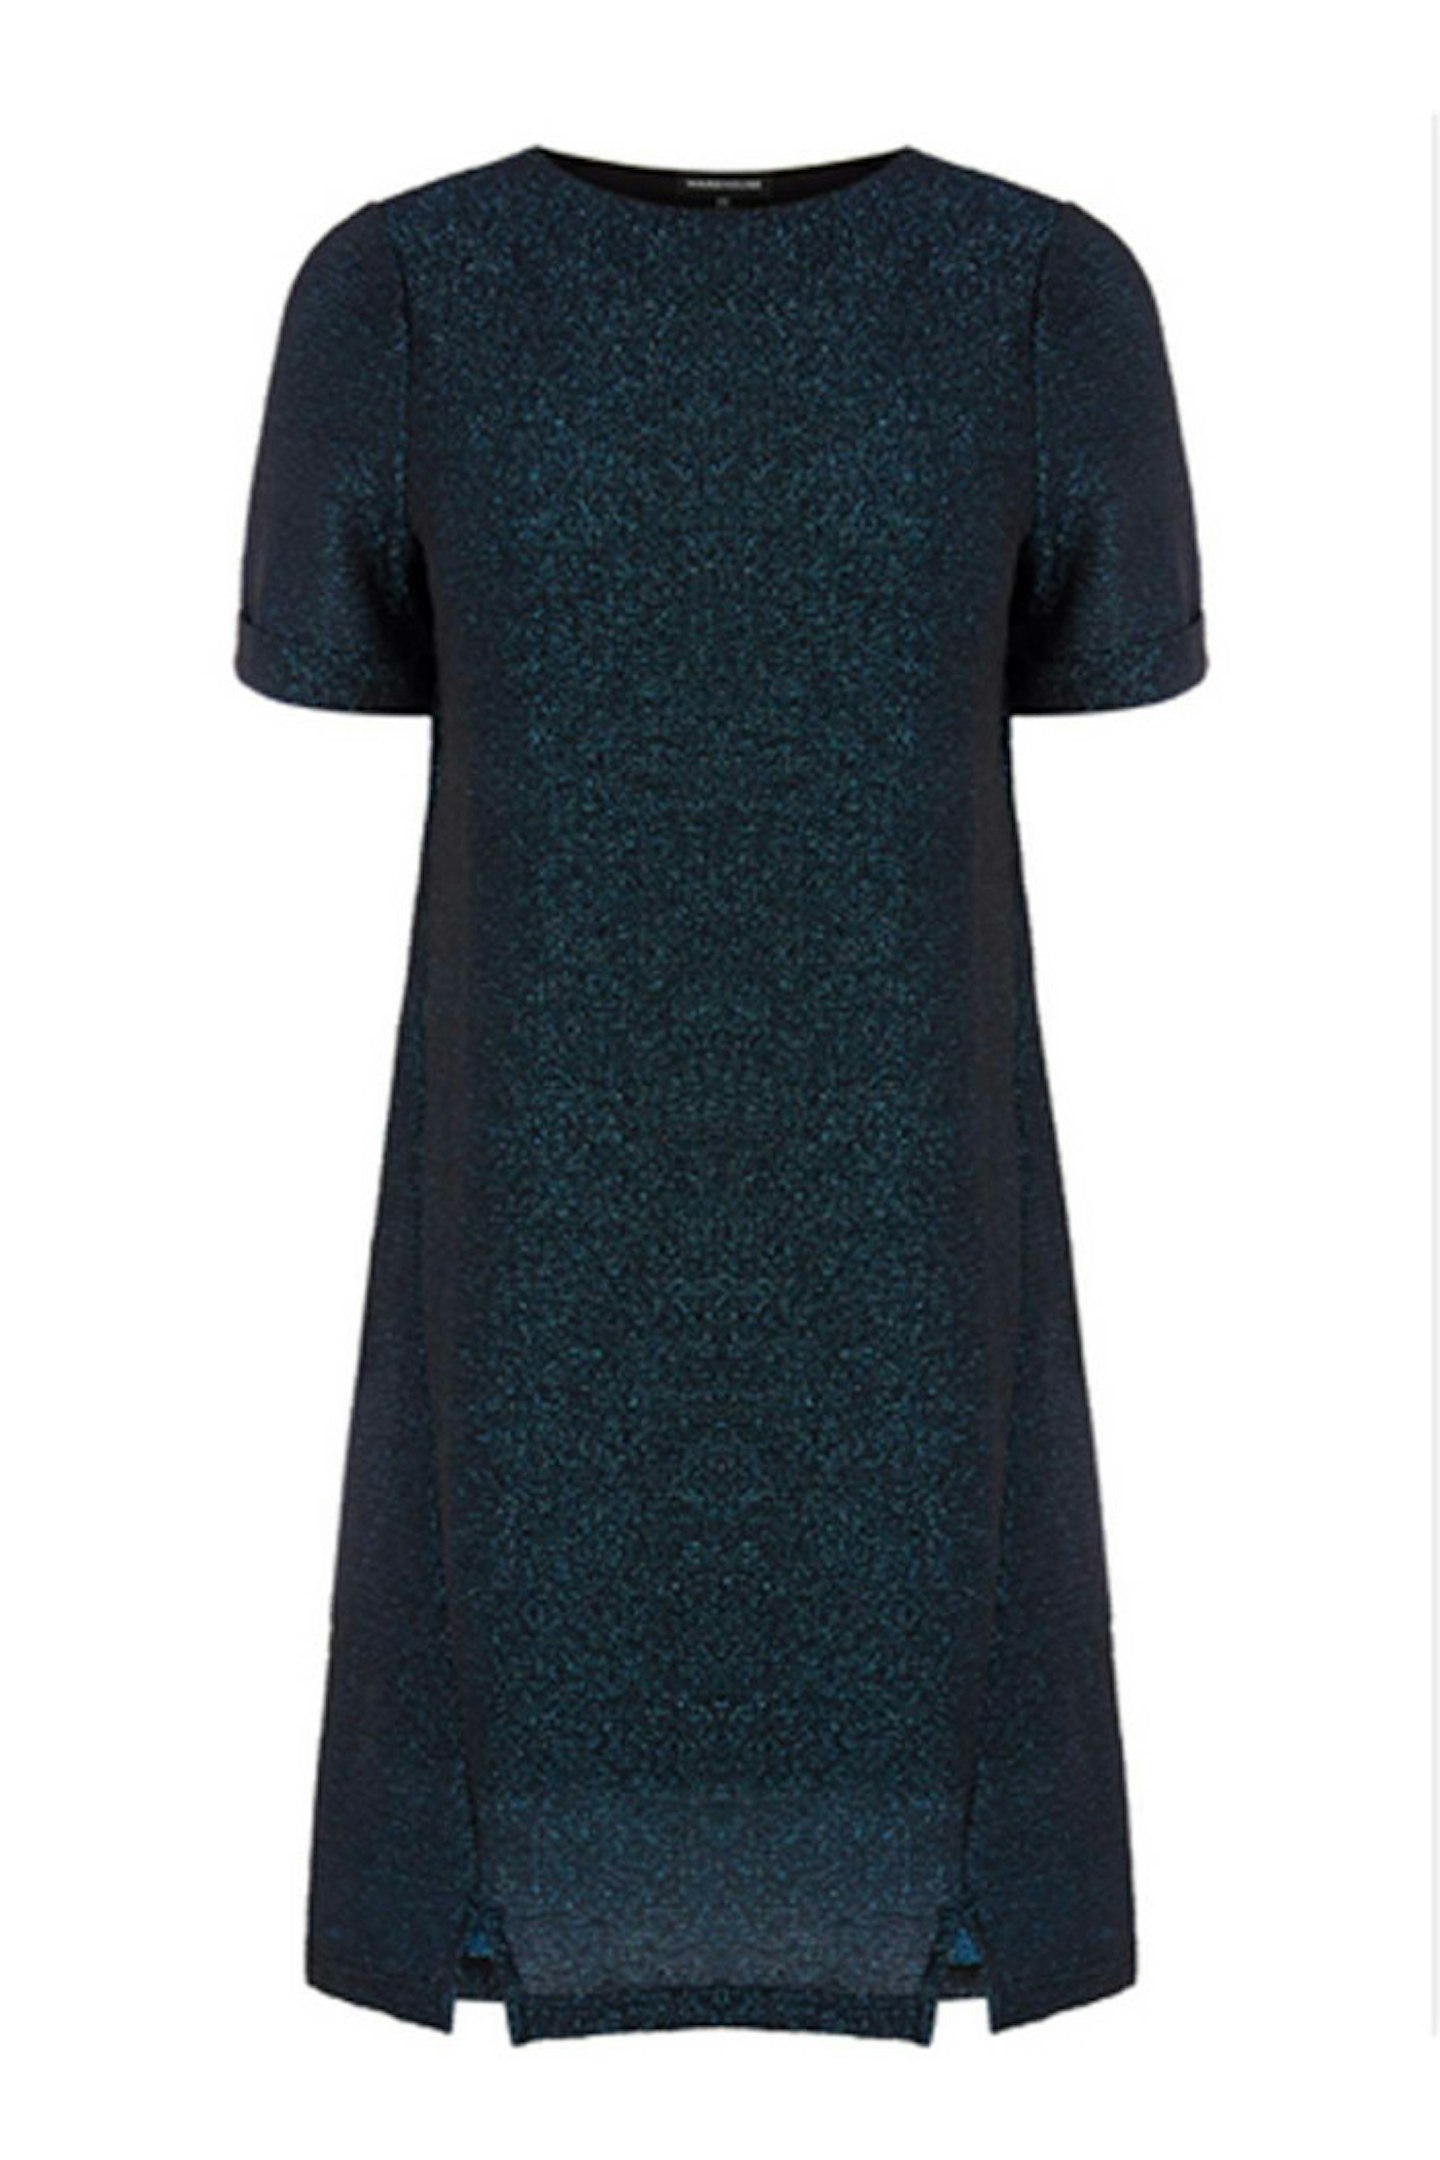 34. Sparkle tunic dress, £45, Warehouse